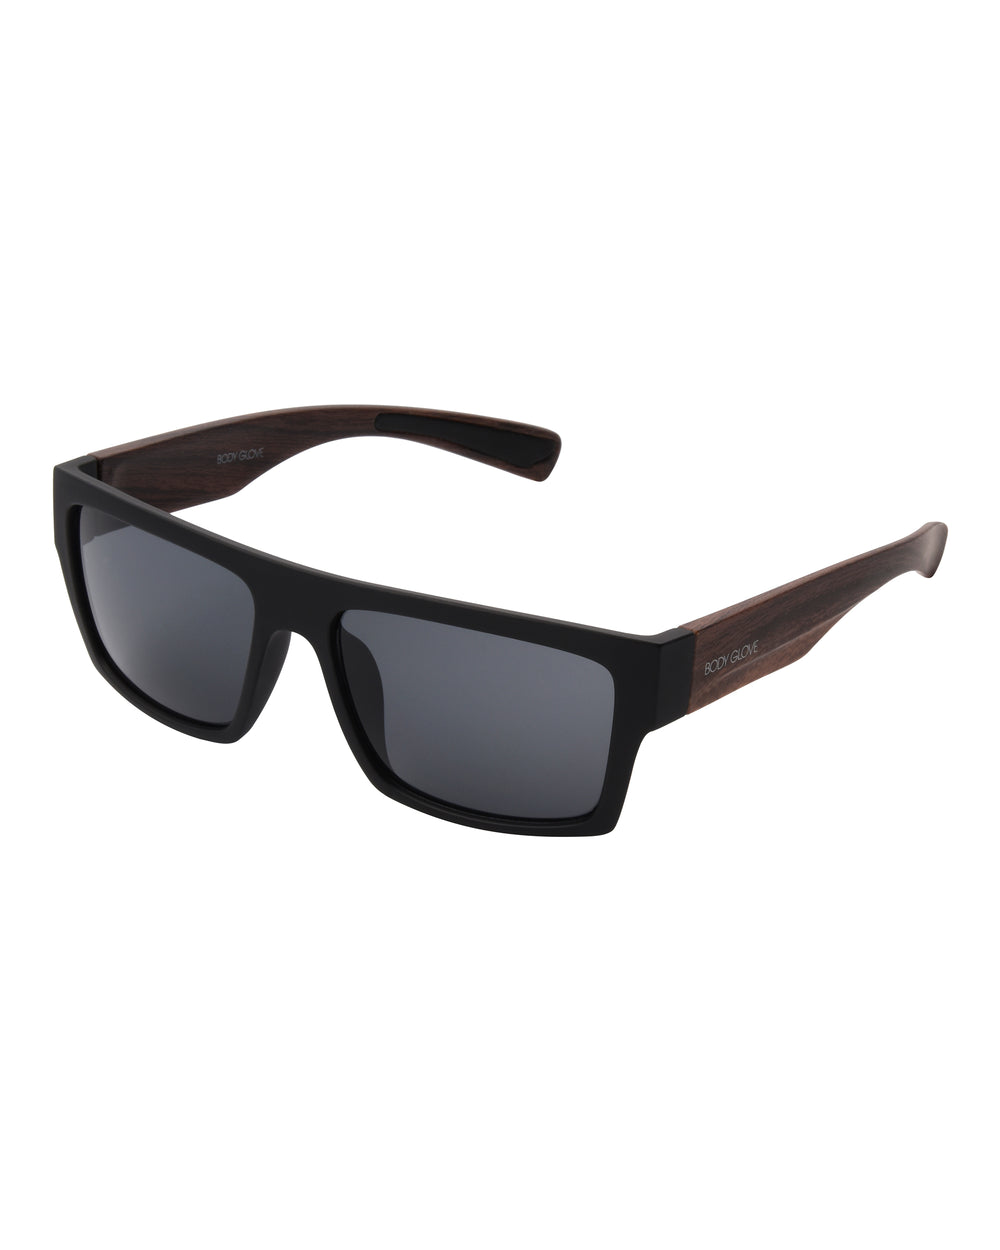 Men's Reggie Rectangular Sunglasses - Black/Dark Brown